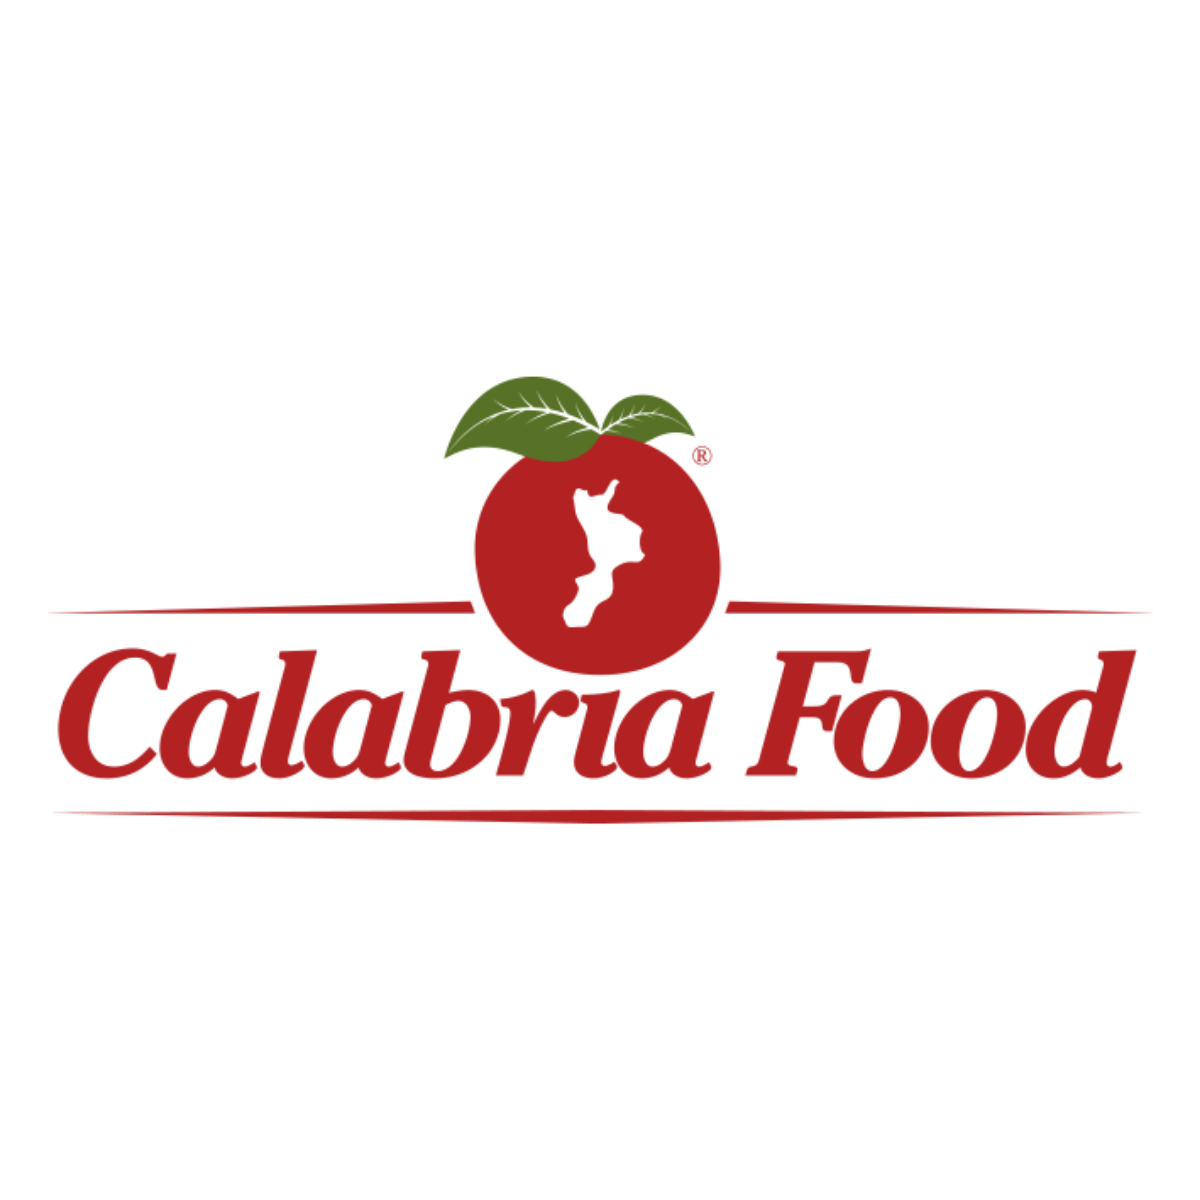 CALABRIA FOOD